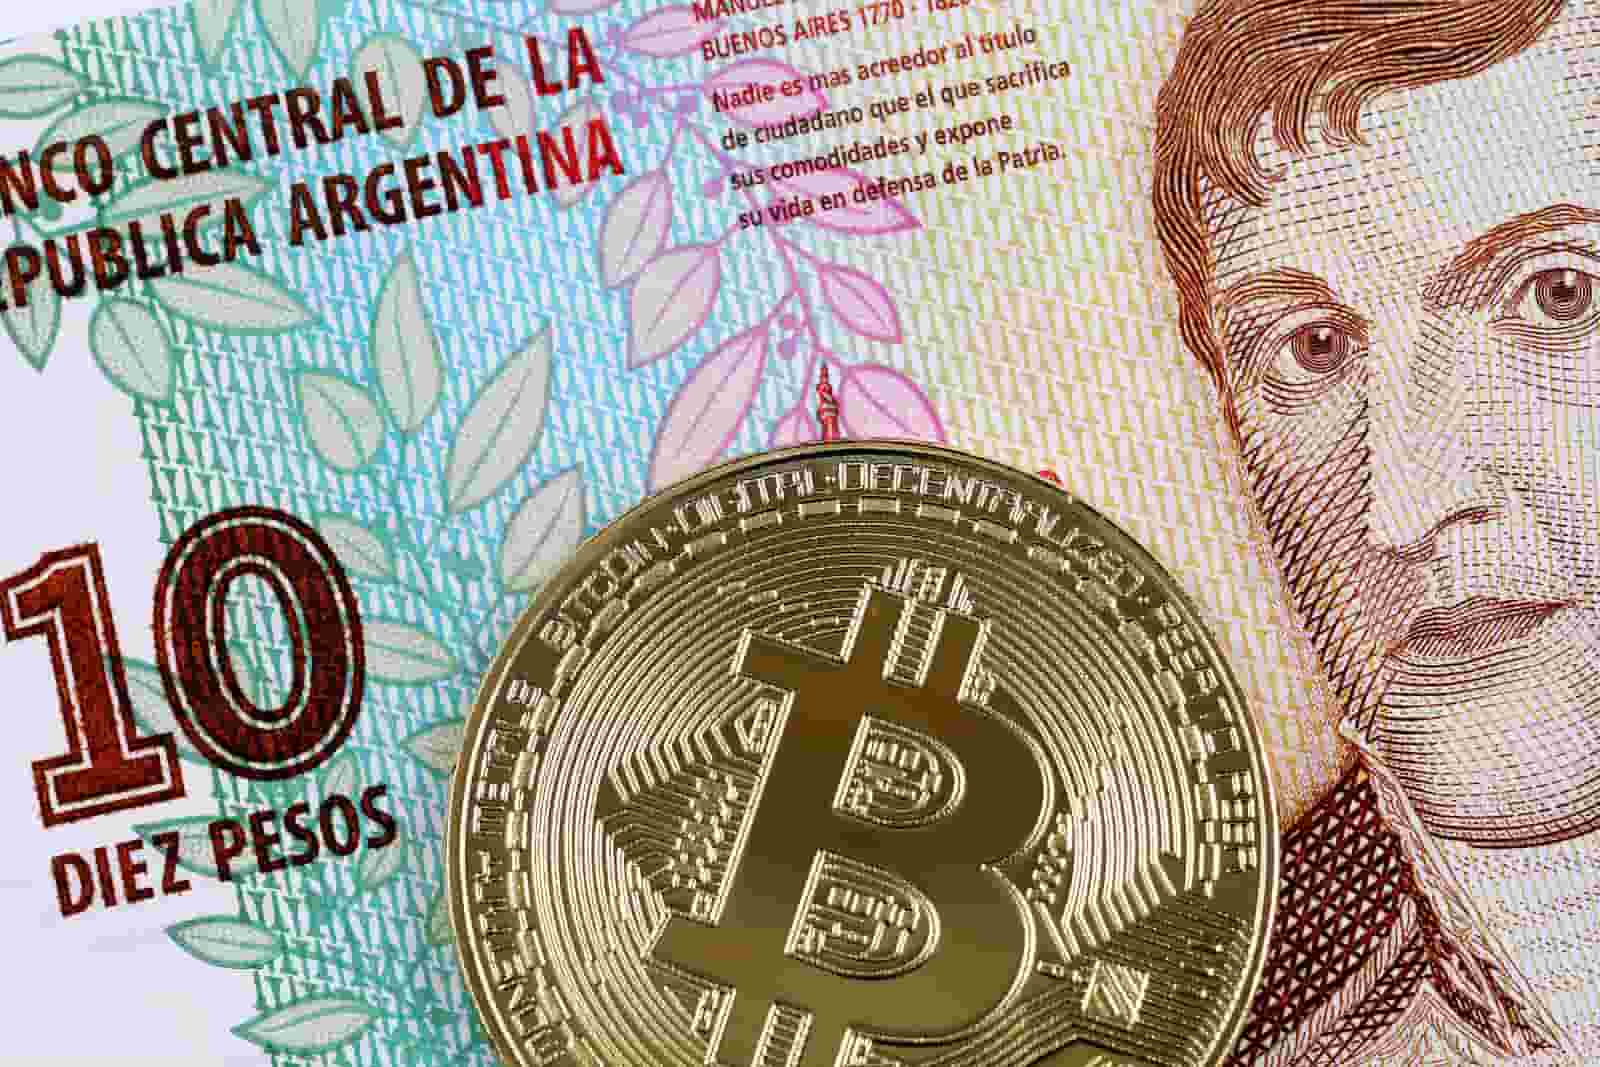 valoare bitcoin pesos argentinos)